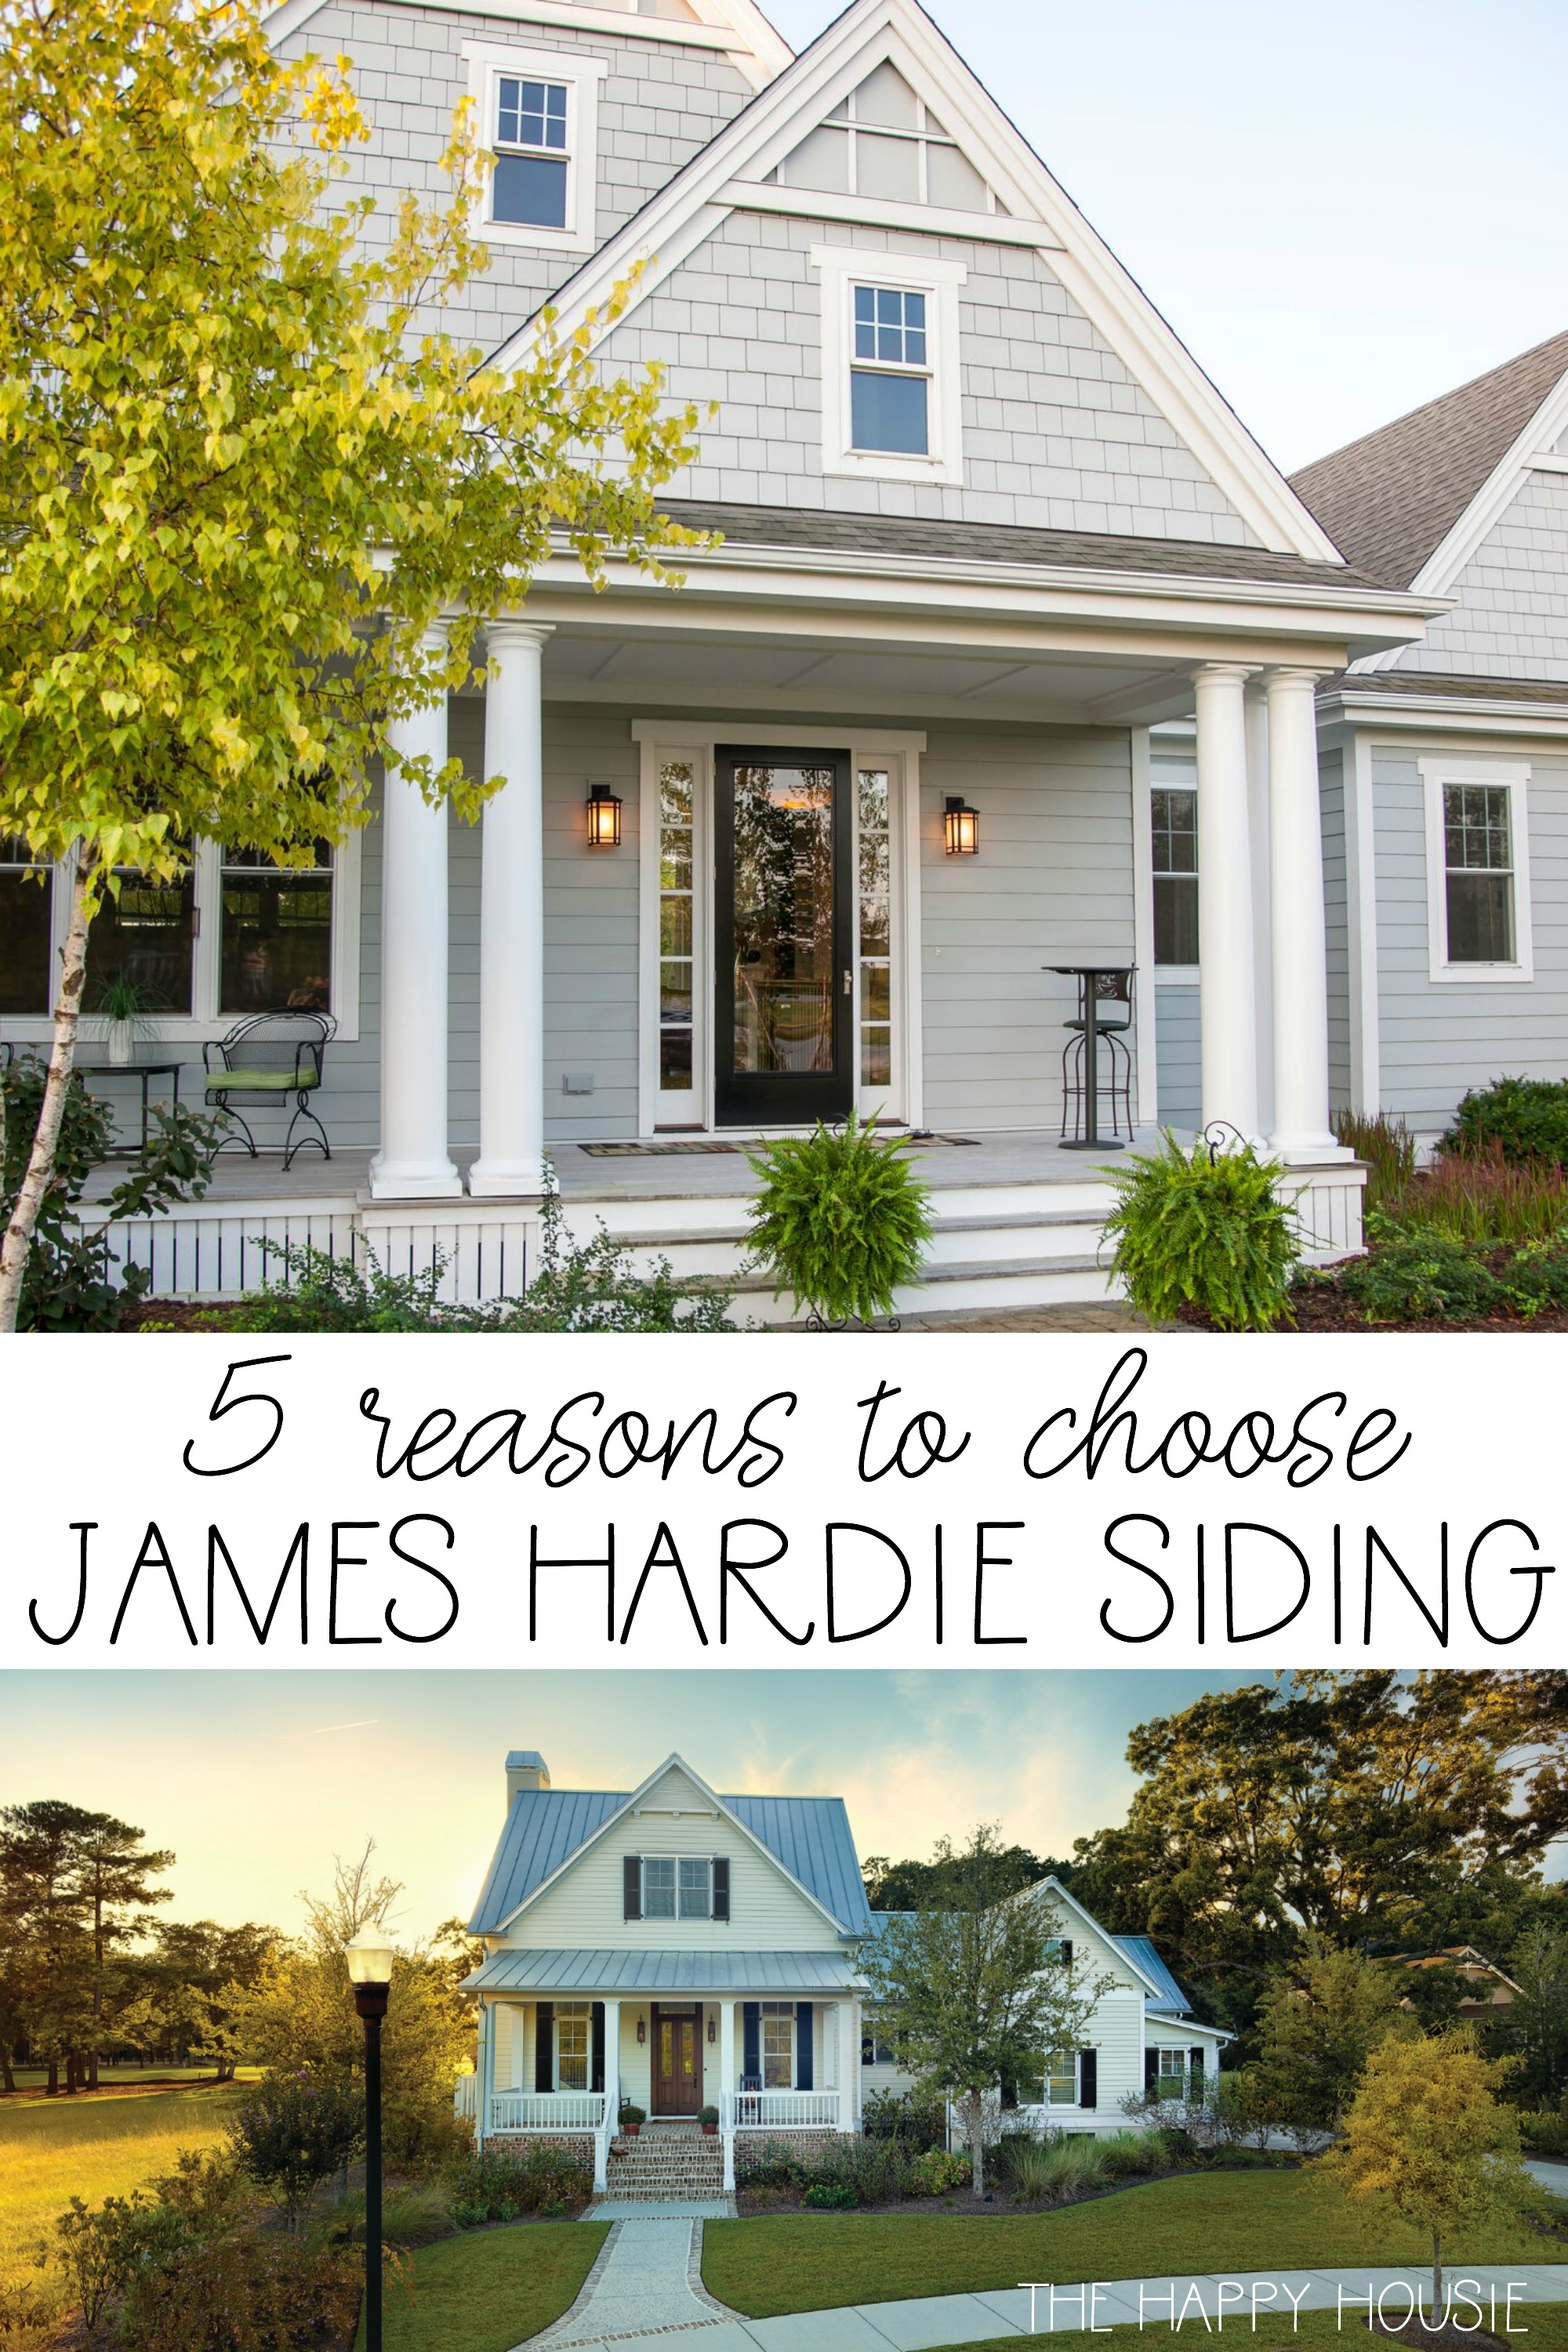 5 Reasons To Choose James Hardie Siding graphic.